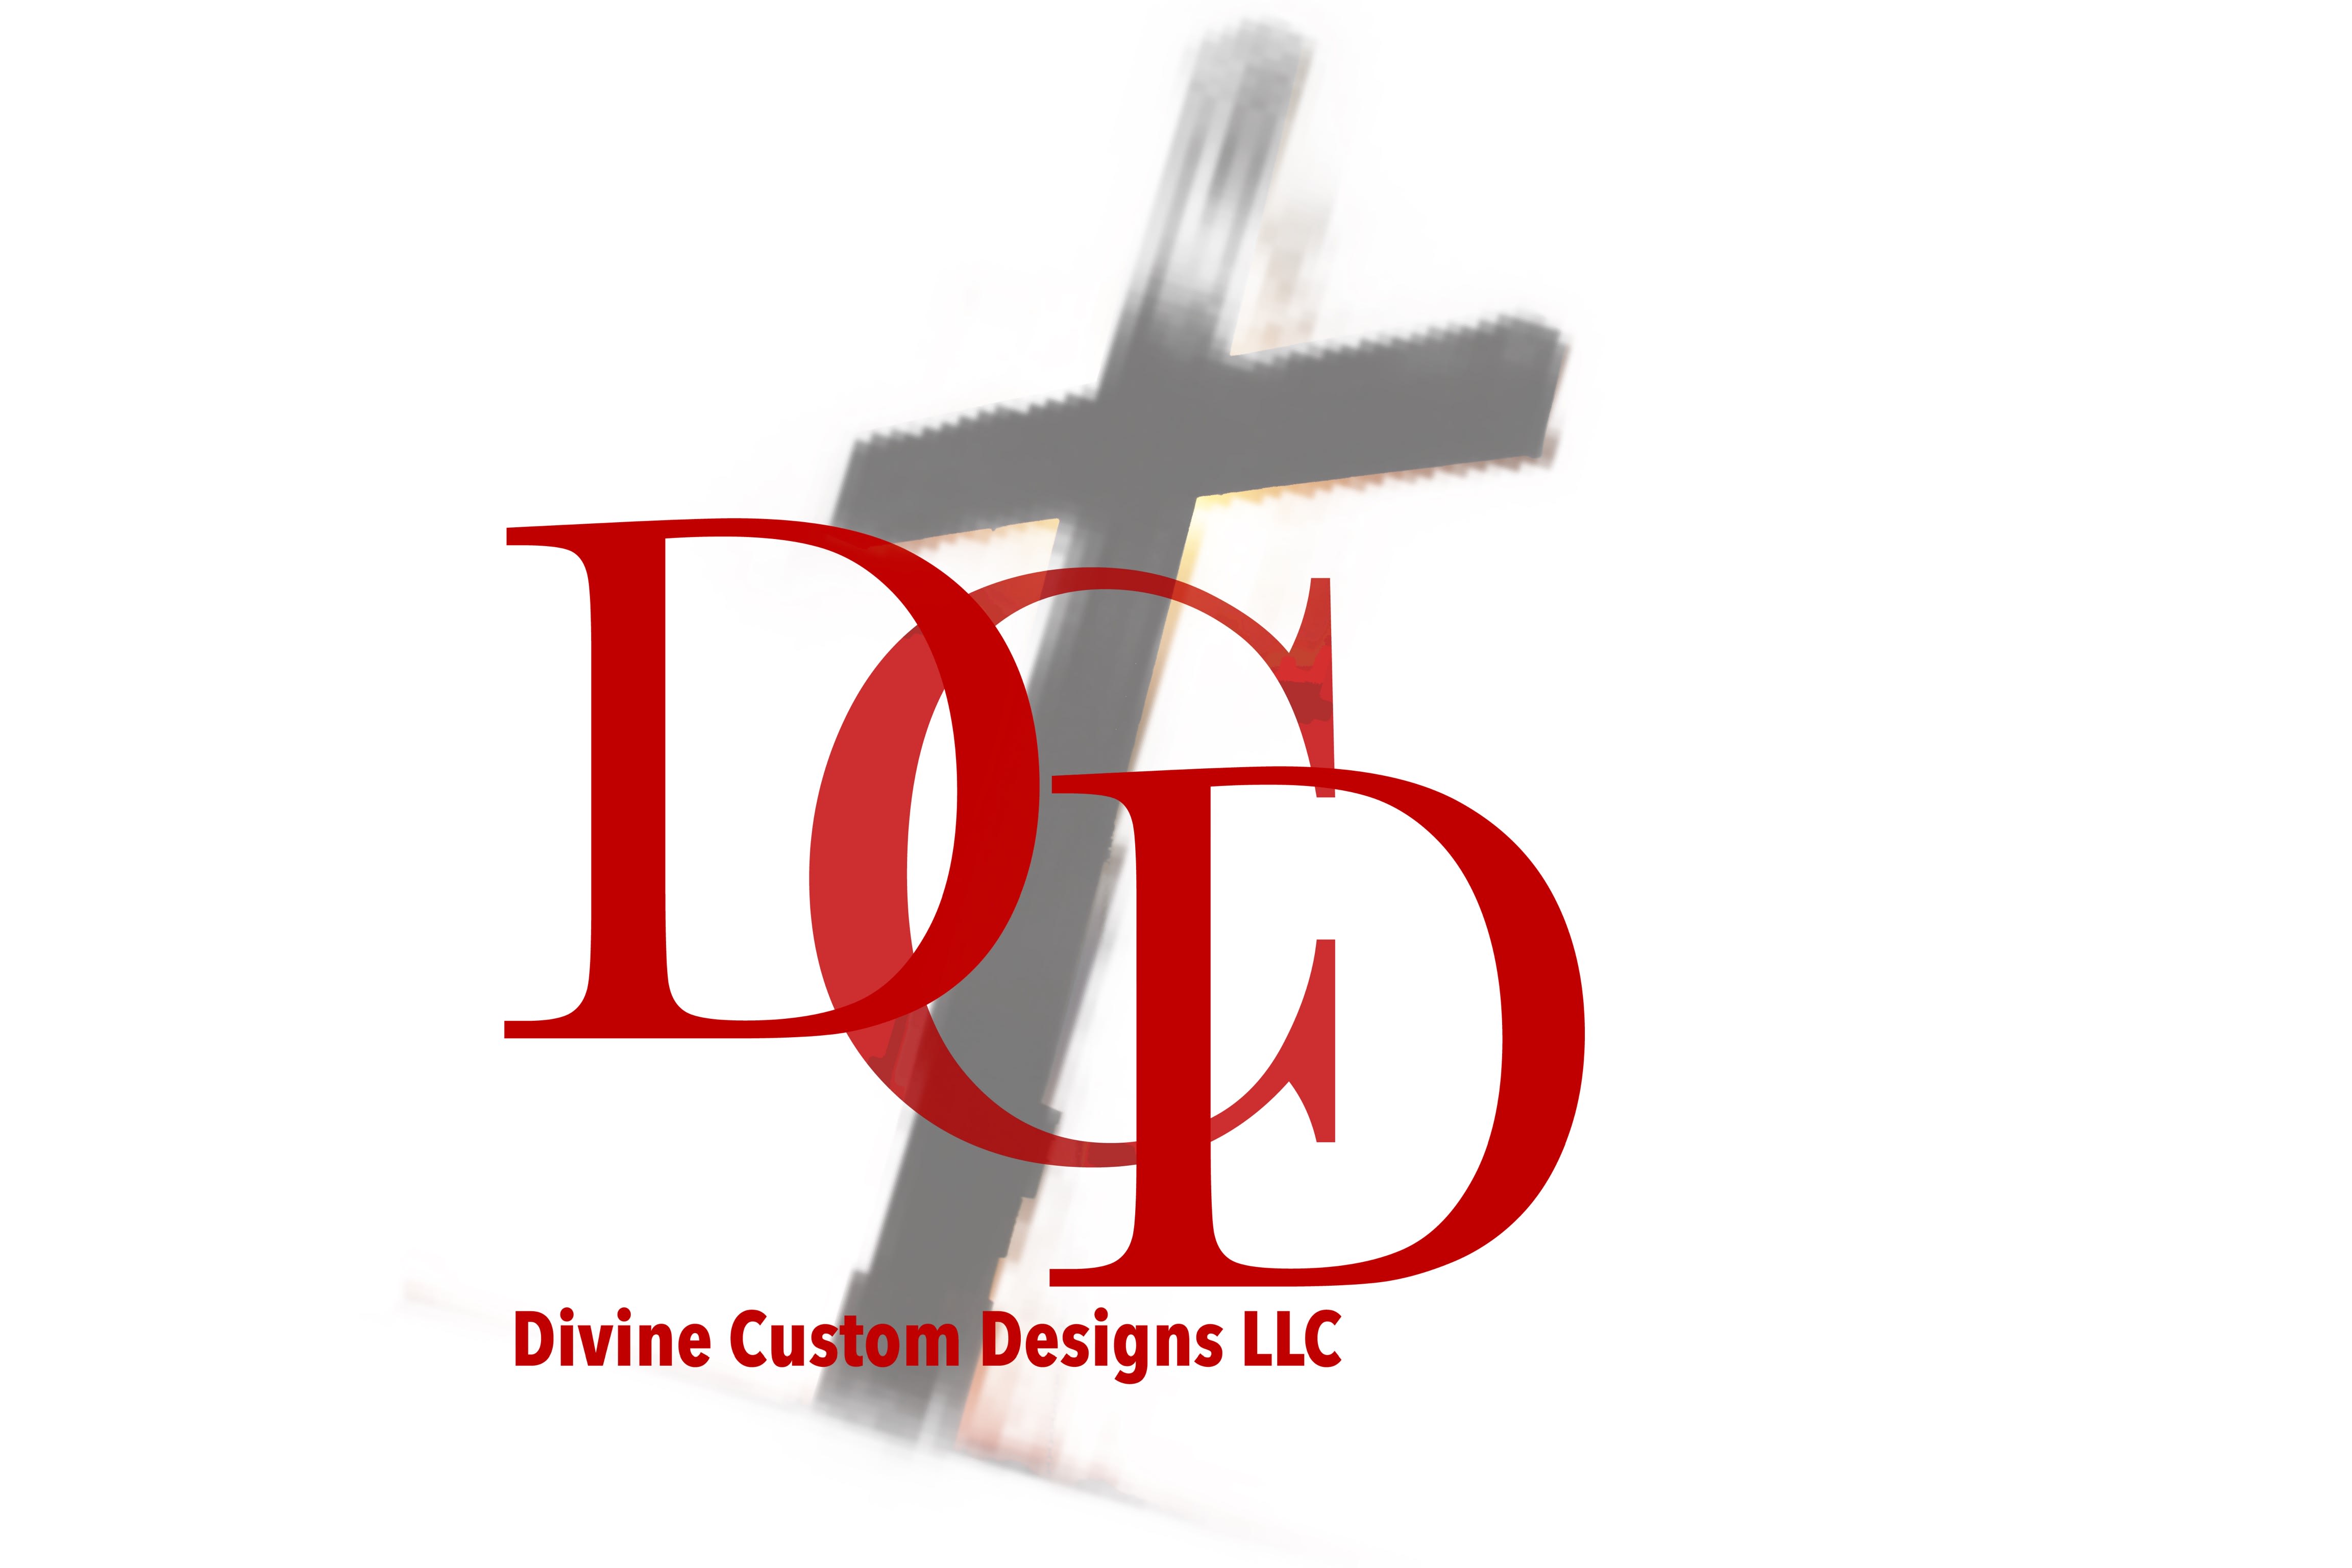 Divine Custom Designs LLC